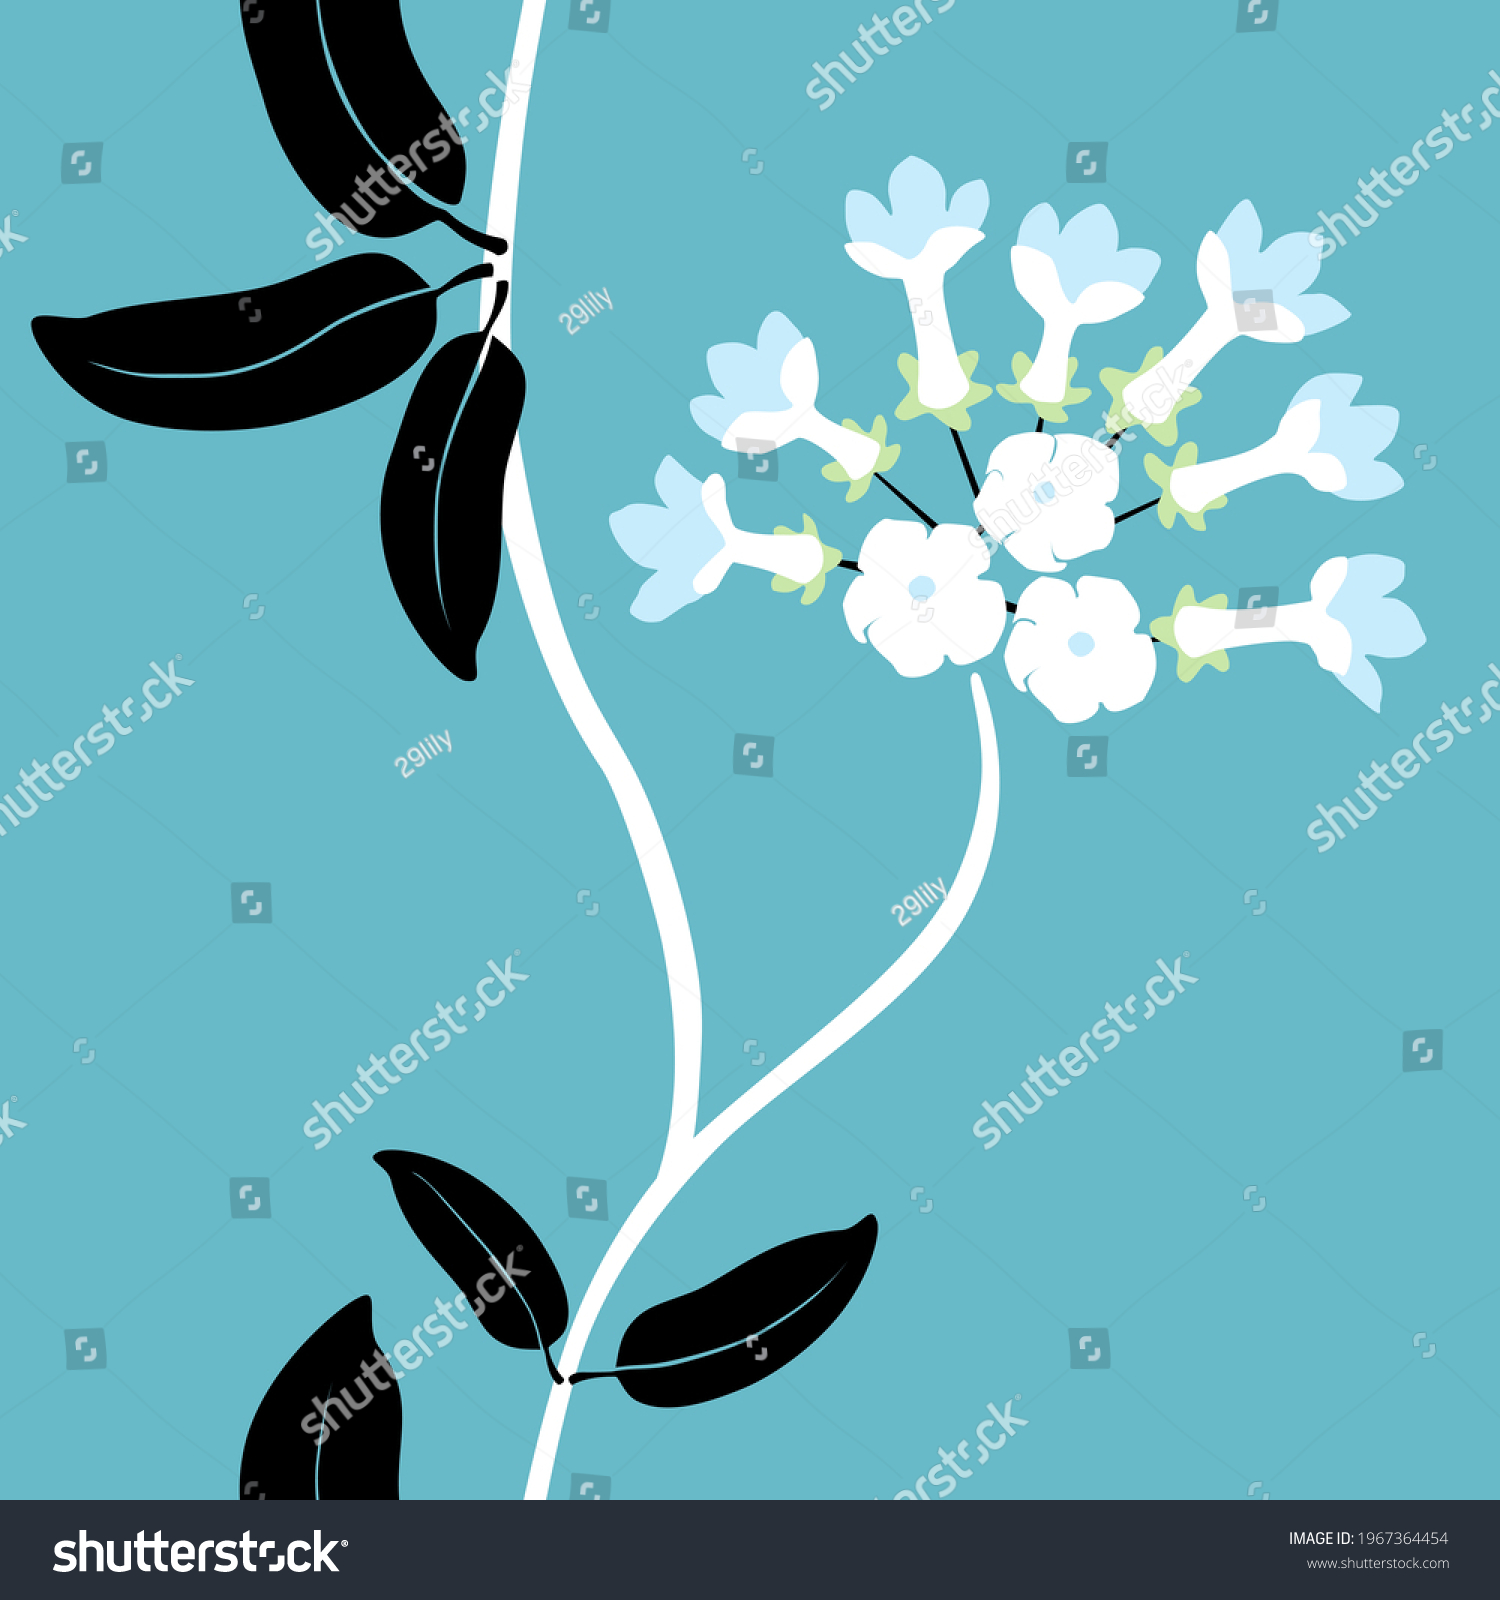 Madagascar jasmine flower vector, stephanotis floribunda illustration abstract bright botanical seamless pattern #1967364454